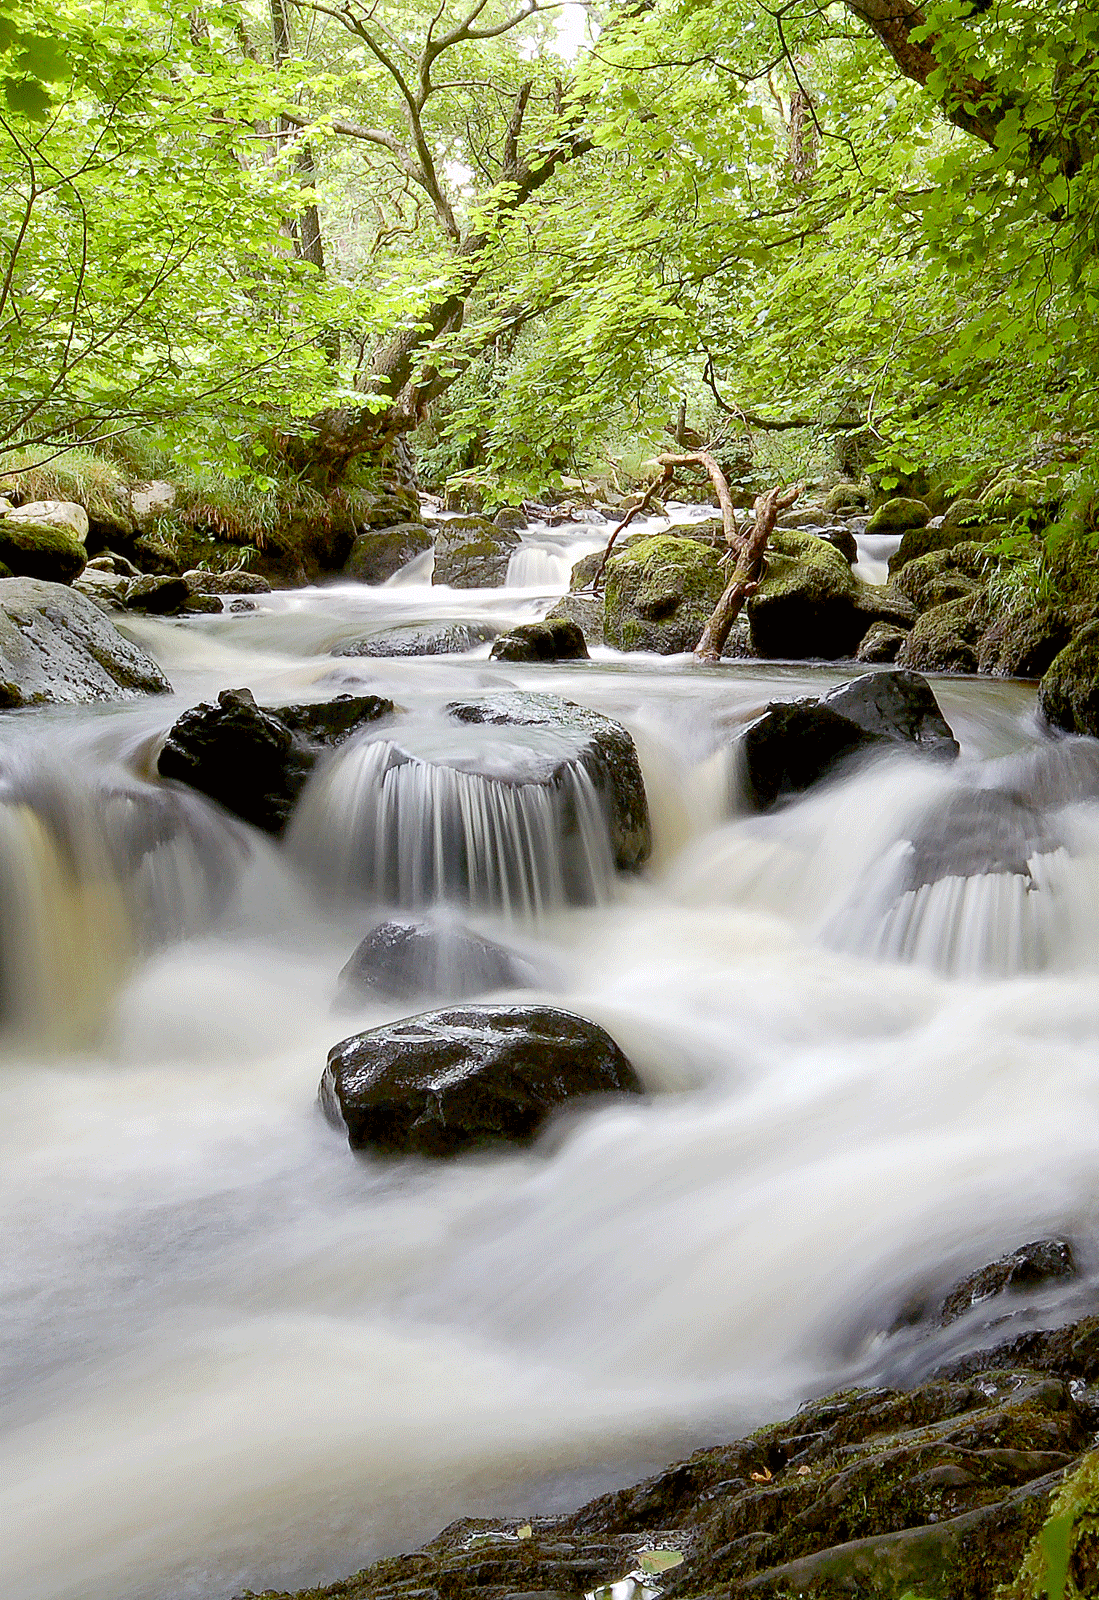 Photograph: Aira Force Waterfall, Penrith. Copyright Ian Legge.